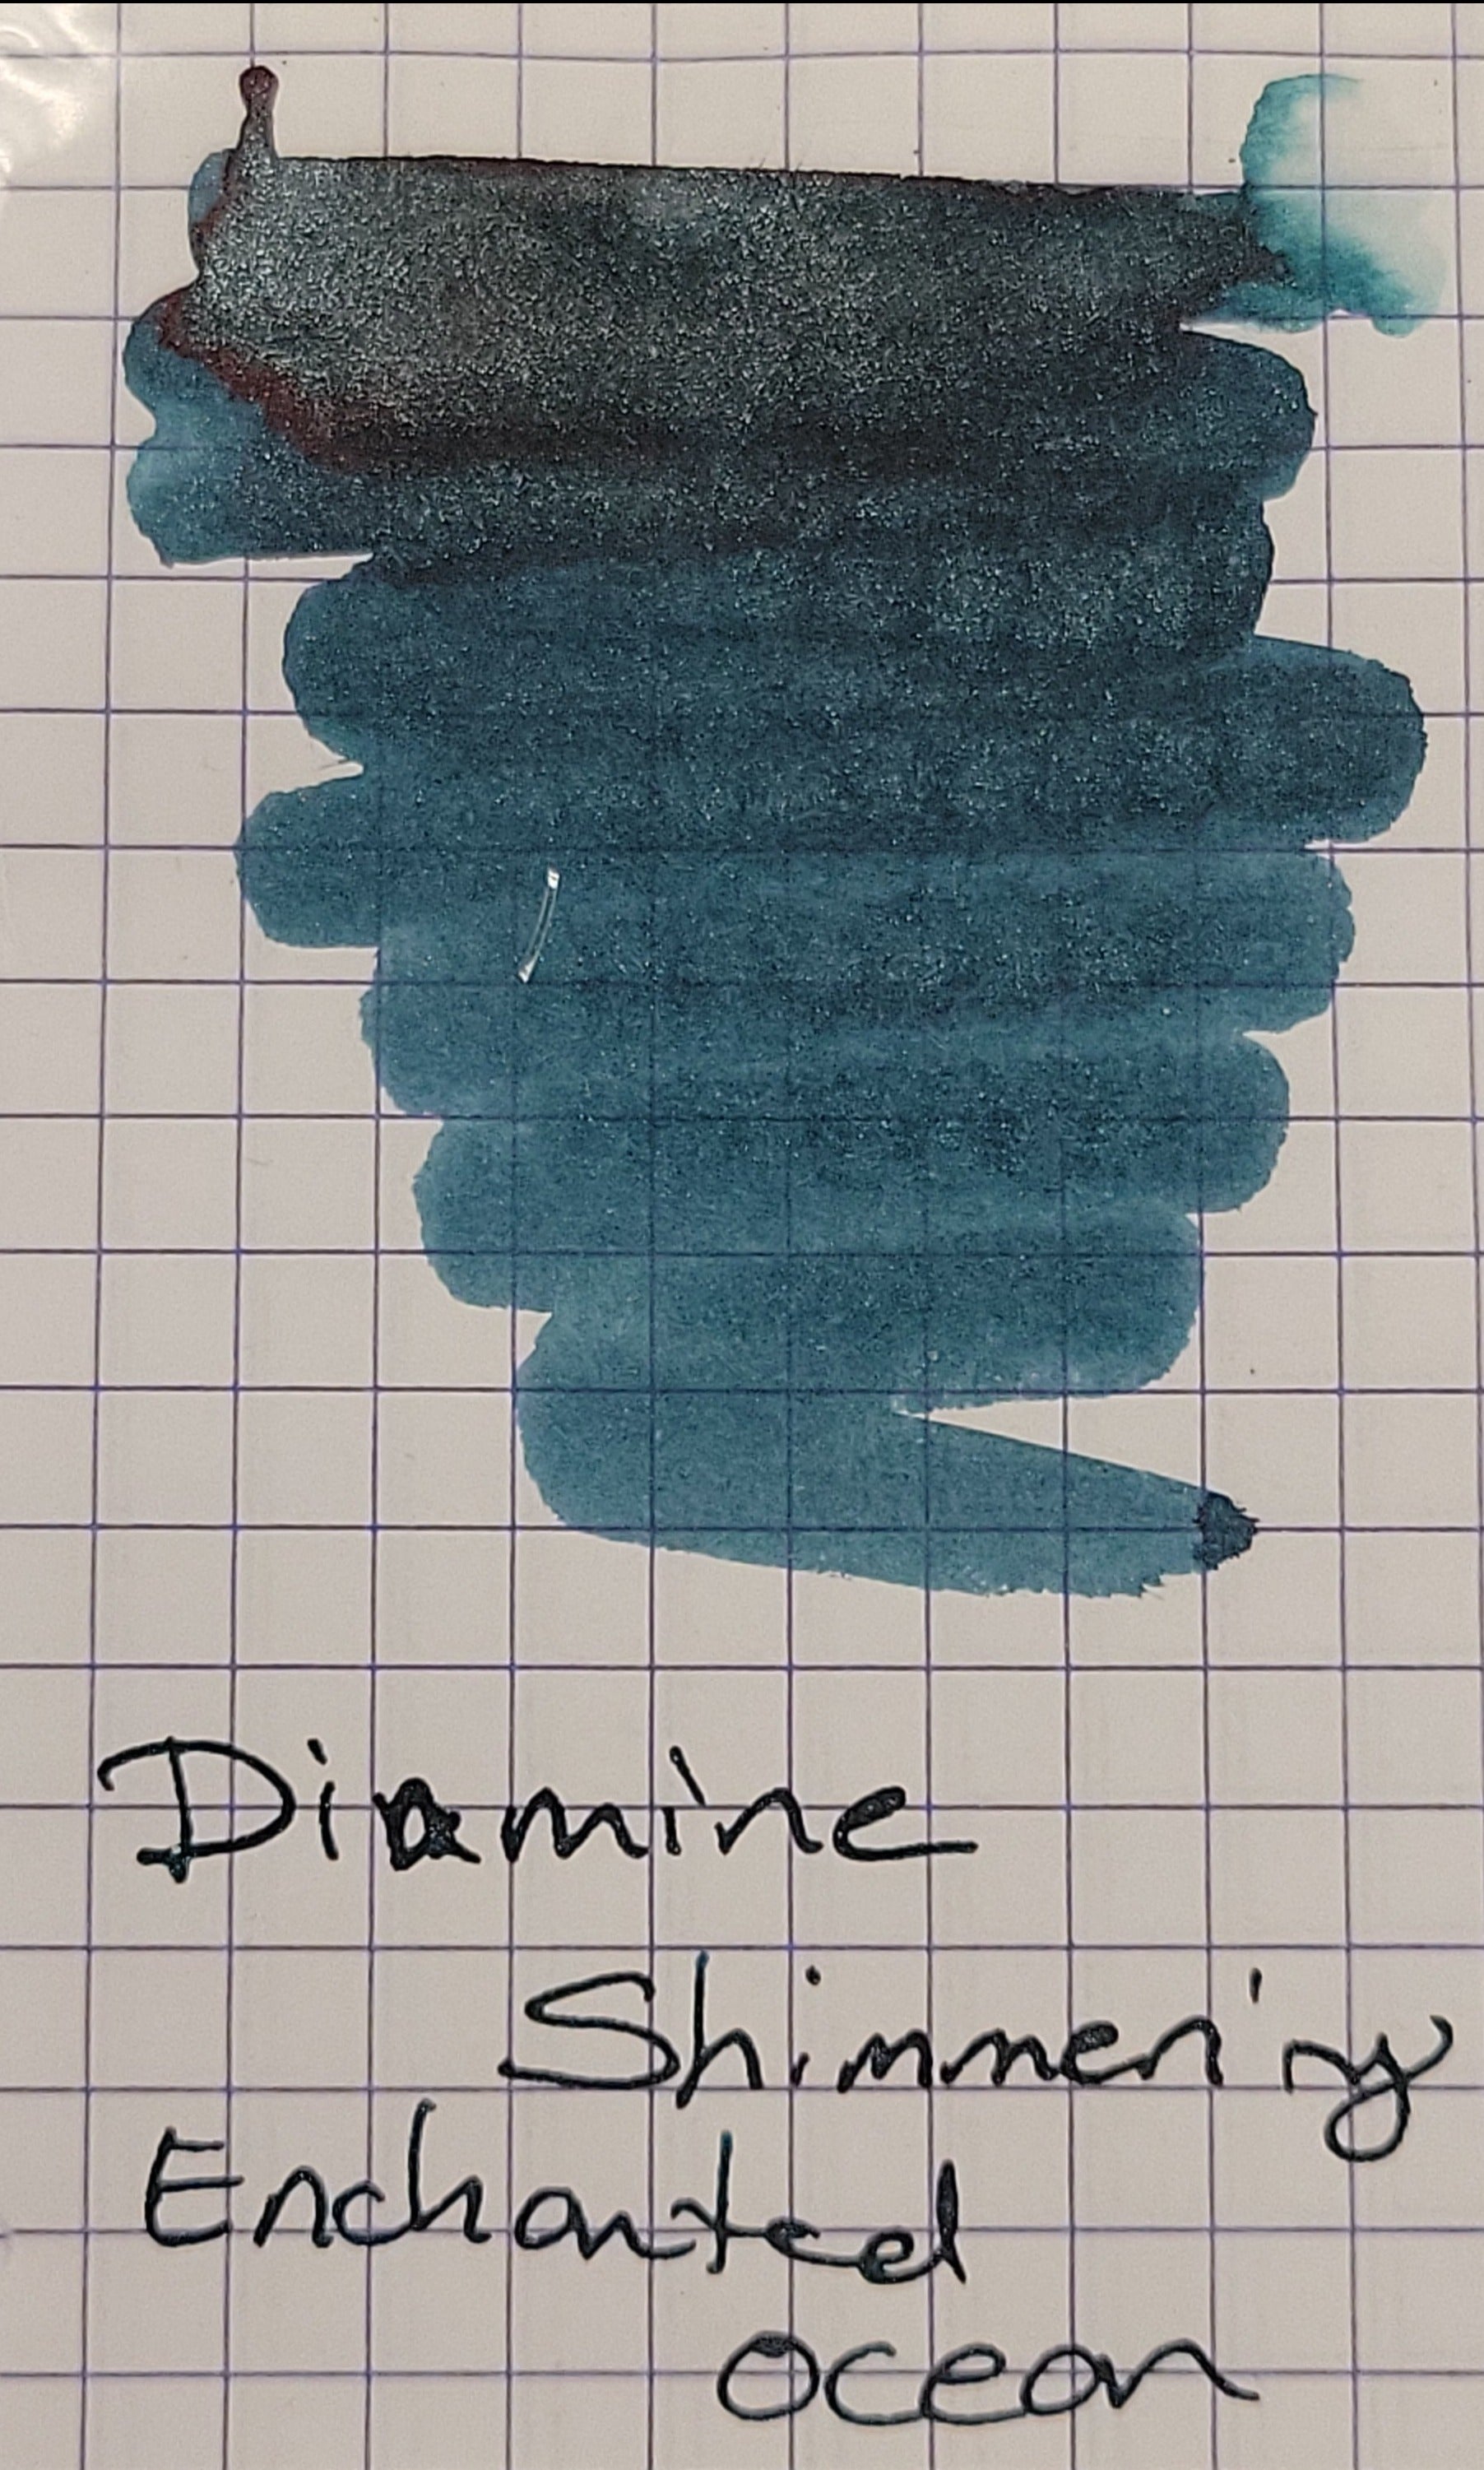 Diamine Shimmer Ink 50 ml Enchanted Ocean - Silver shimmer-Pen Boutique Ltd